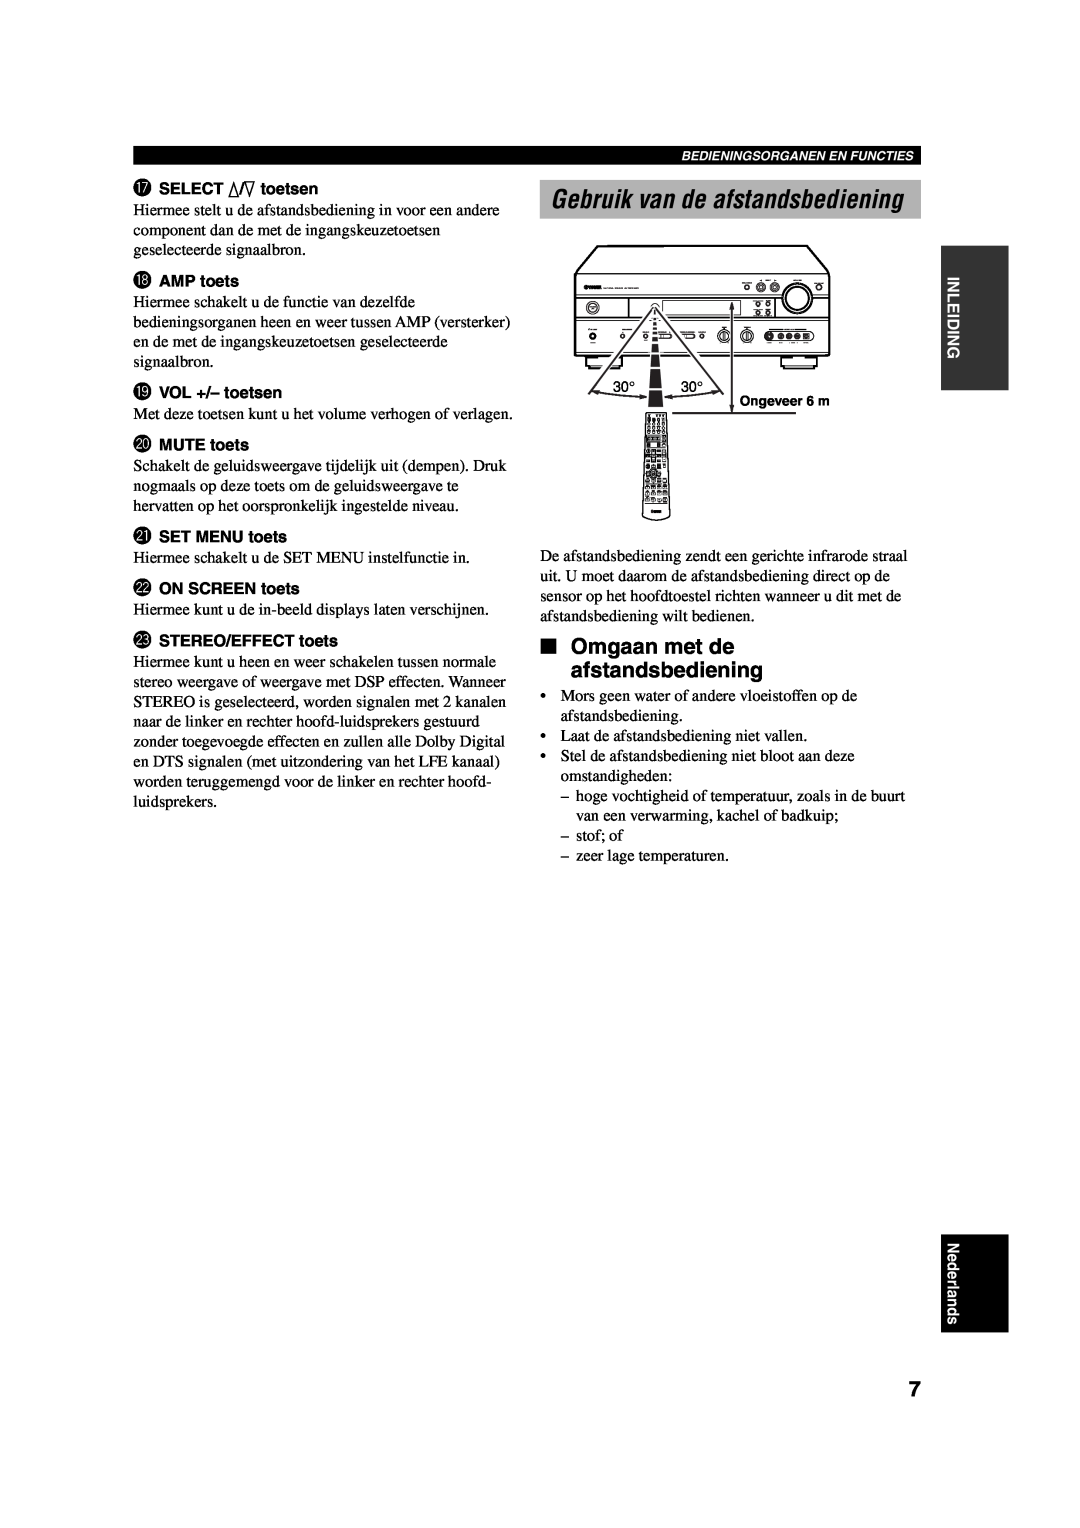 Yamaha RX-V730RDS Gebruik van de afstandsbediening, Omgaan met de afstandsbediening, uSELECT k/n toetsen, iAMP toets 